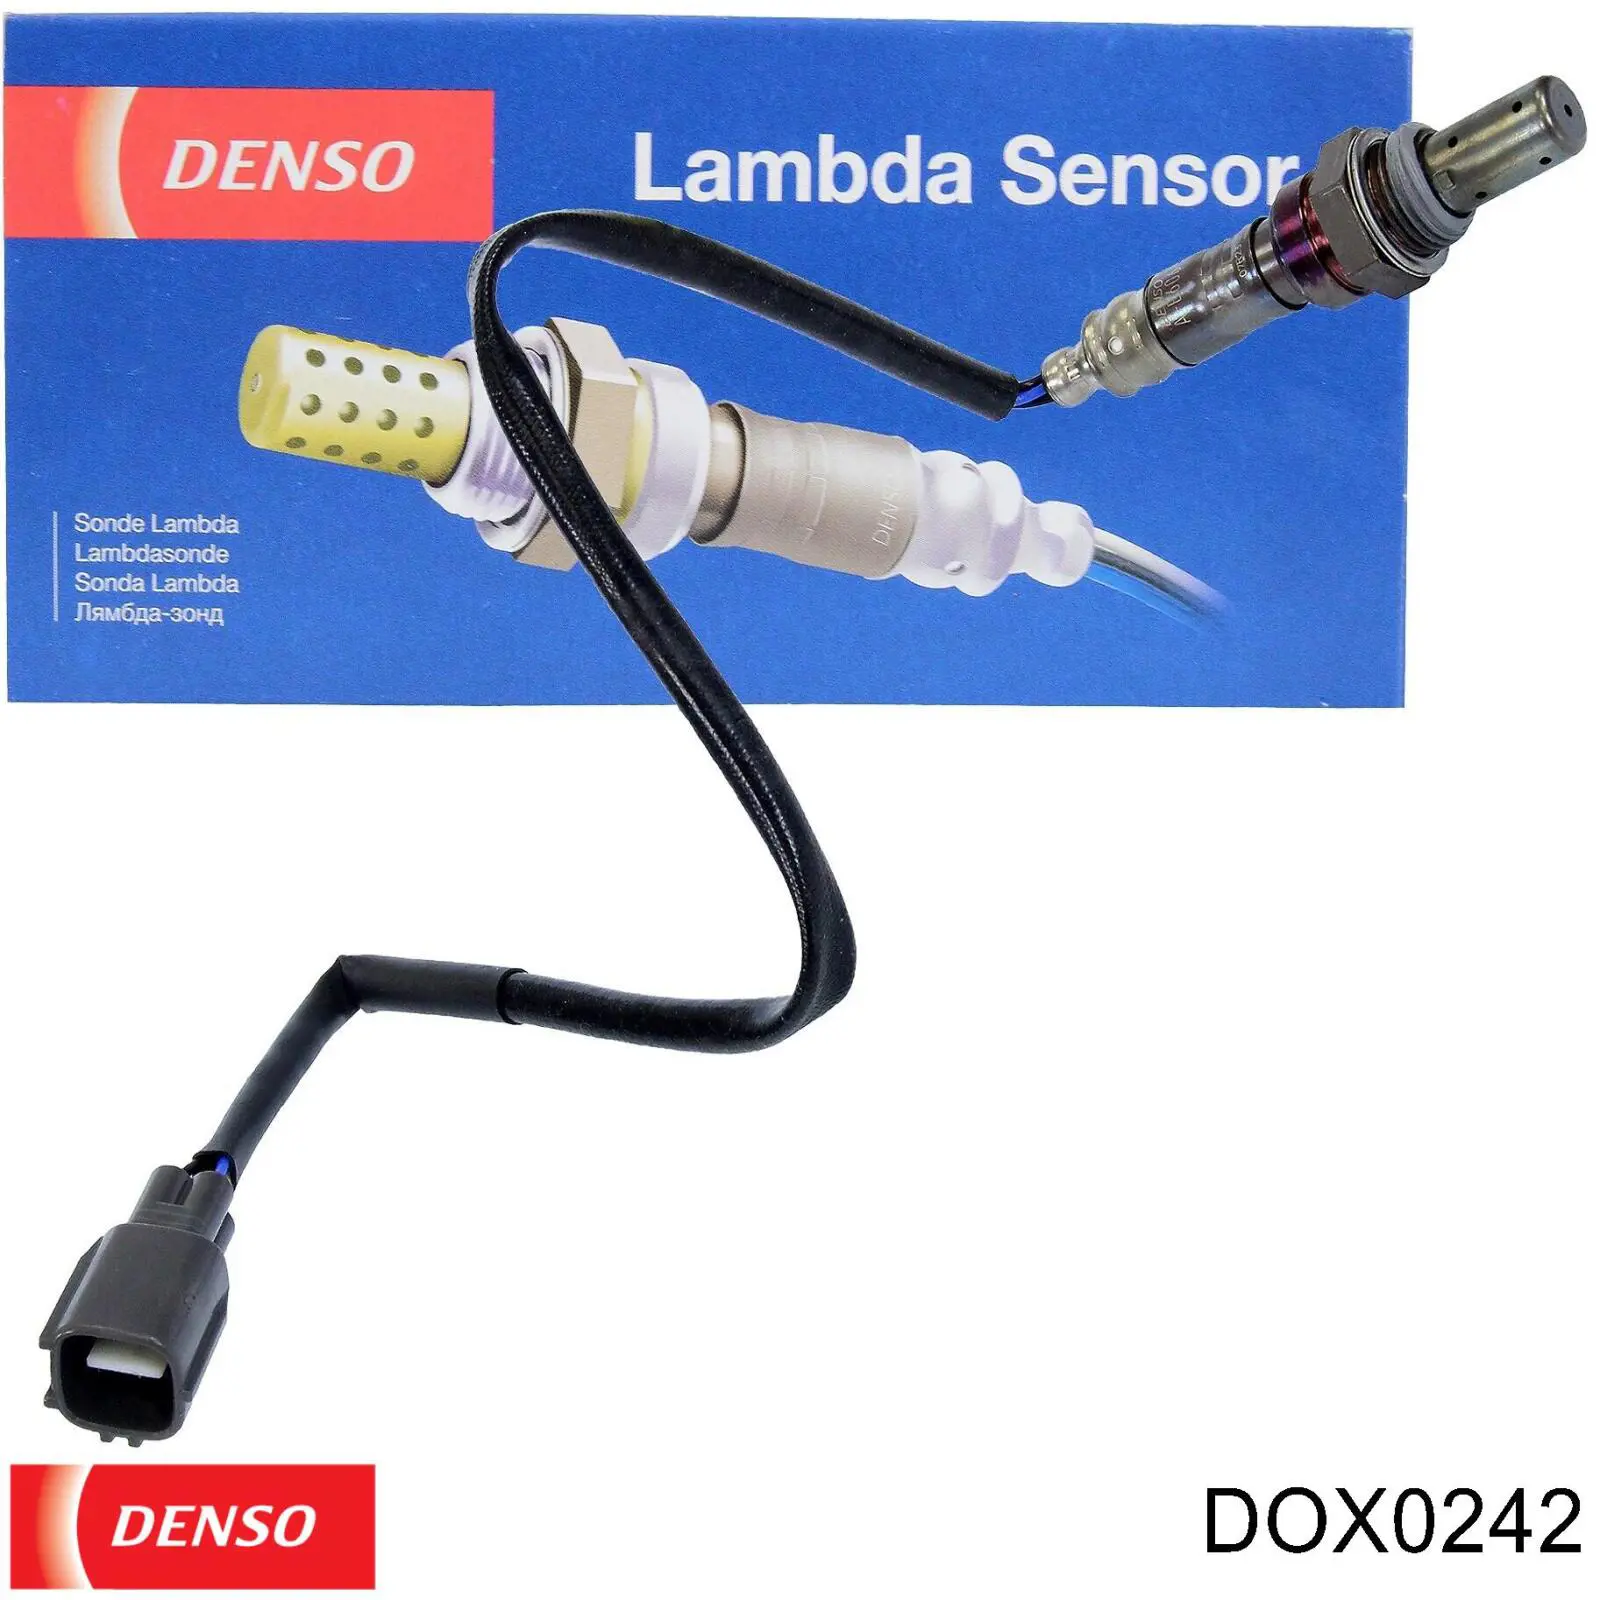 DOX0242 Denso sonda lambda sensor de oxigeno para catalizador